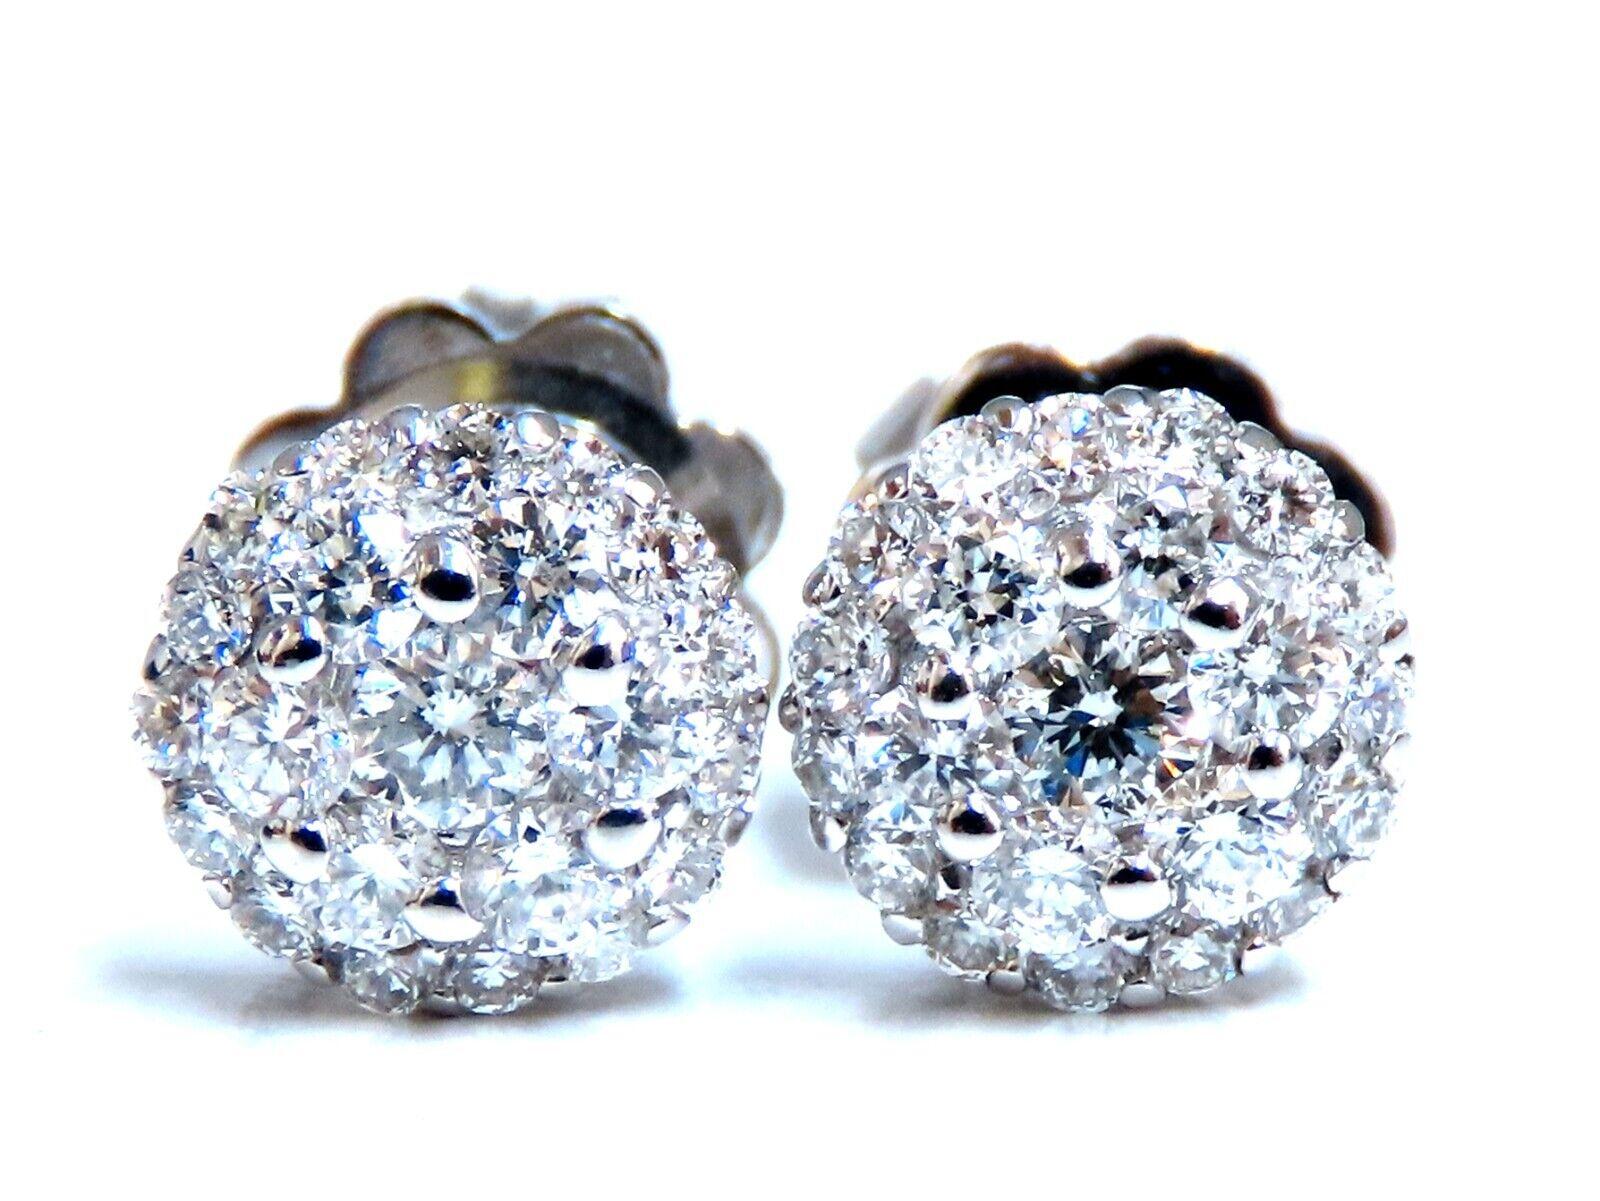 cluster diamond earrings.

.70 carat natural round diamonds

G -H color vs2 clarity

14 karat white gold 2.2 g

Earrings measure 7mm wide